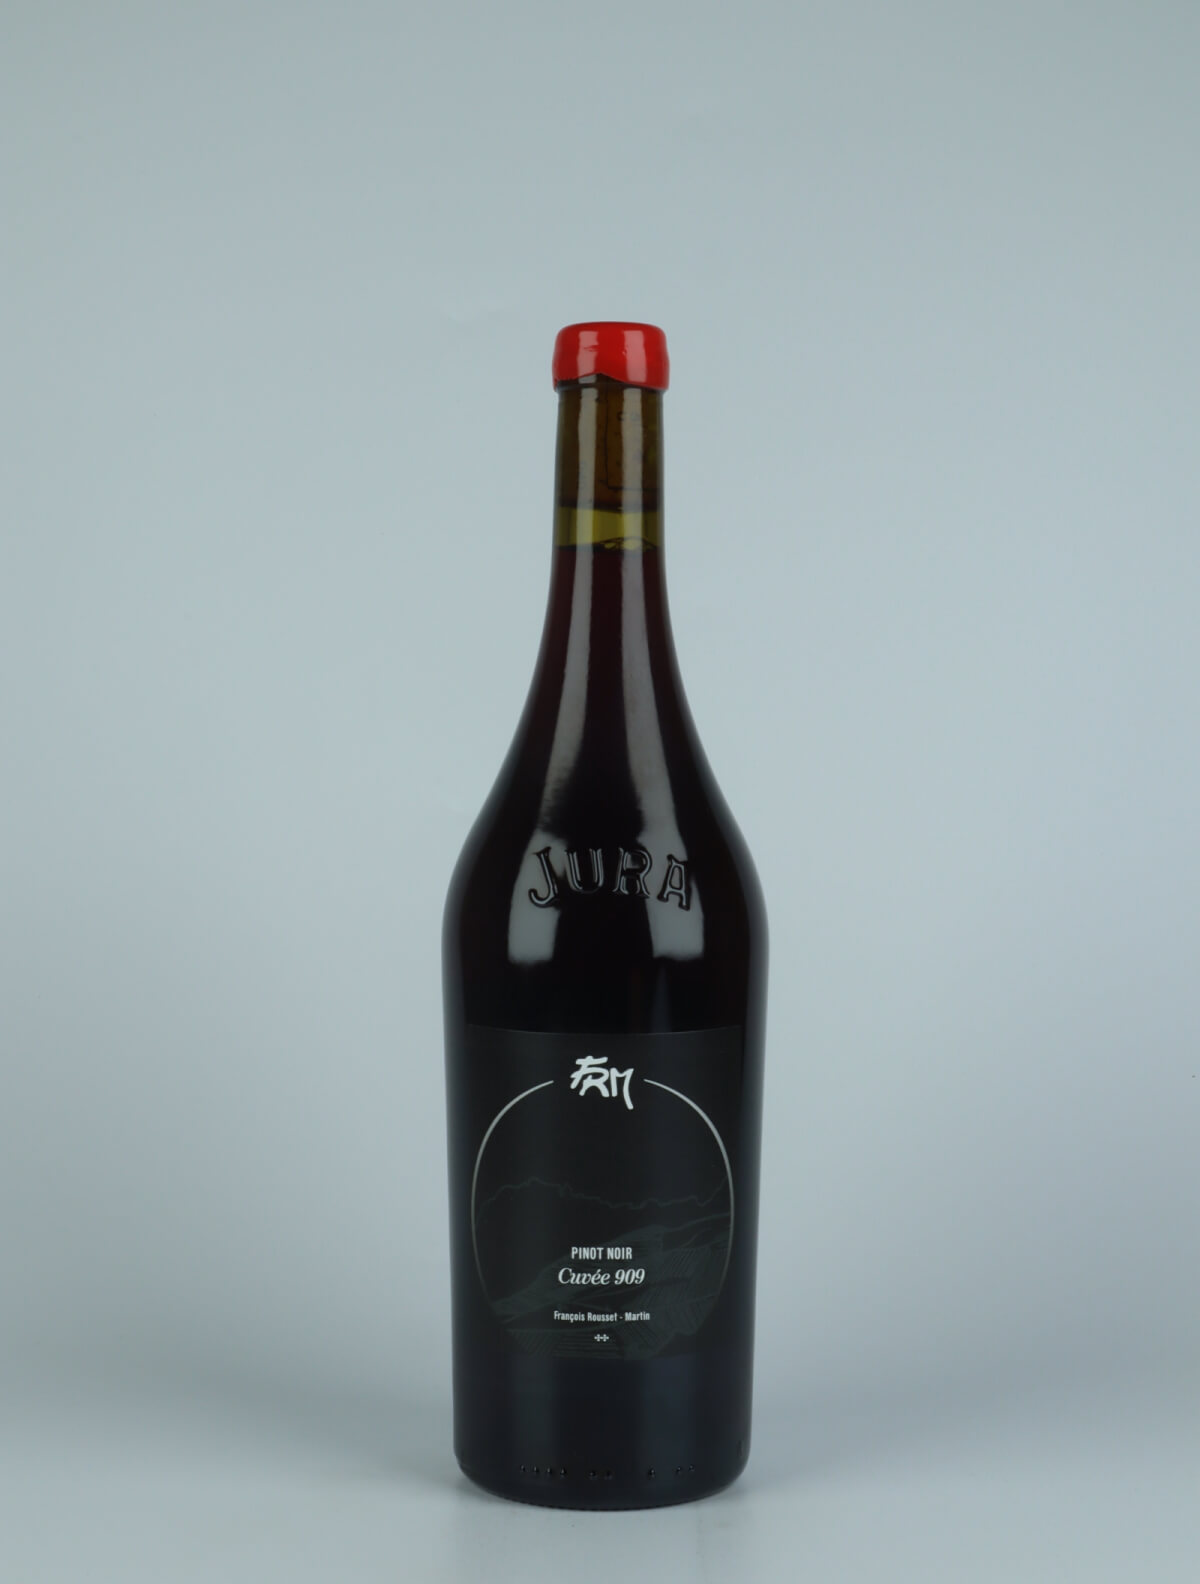 A bottle 2018 Cuvée 909 - Pinot Noir Red wine from François Rousset-Martin, Jura in France